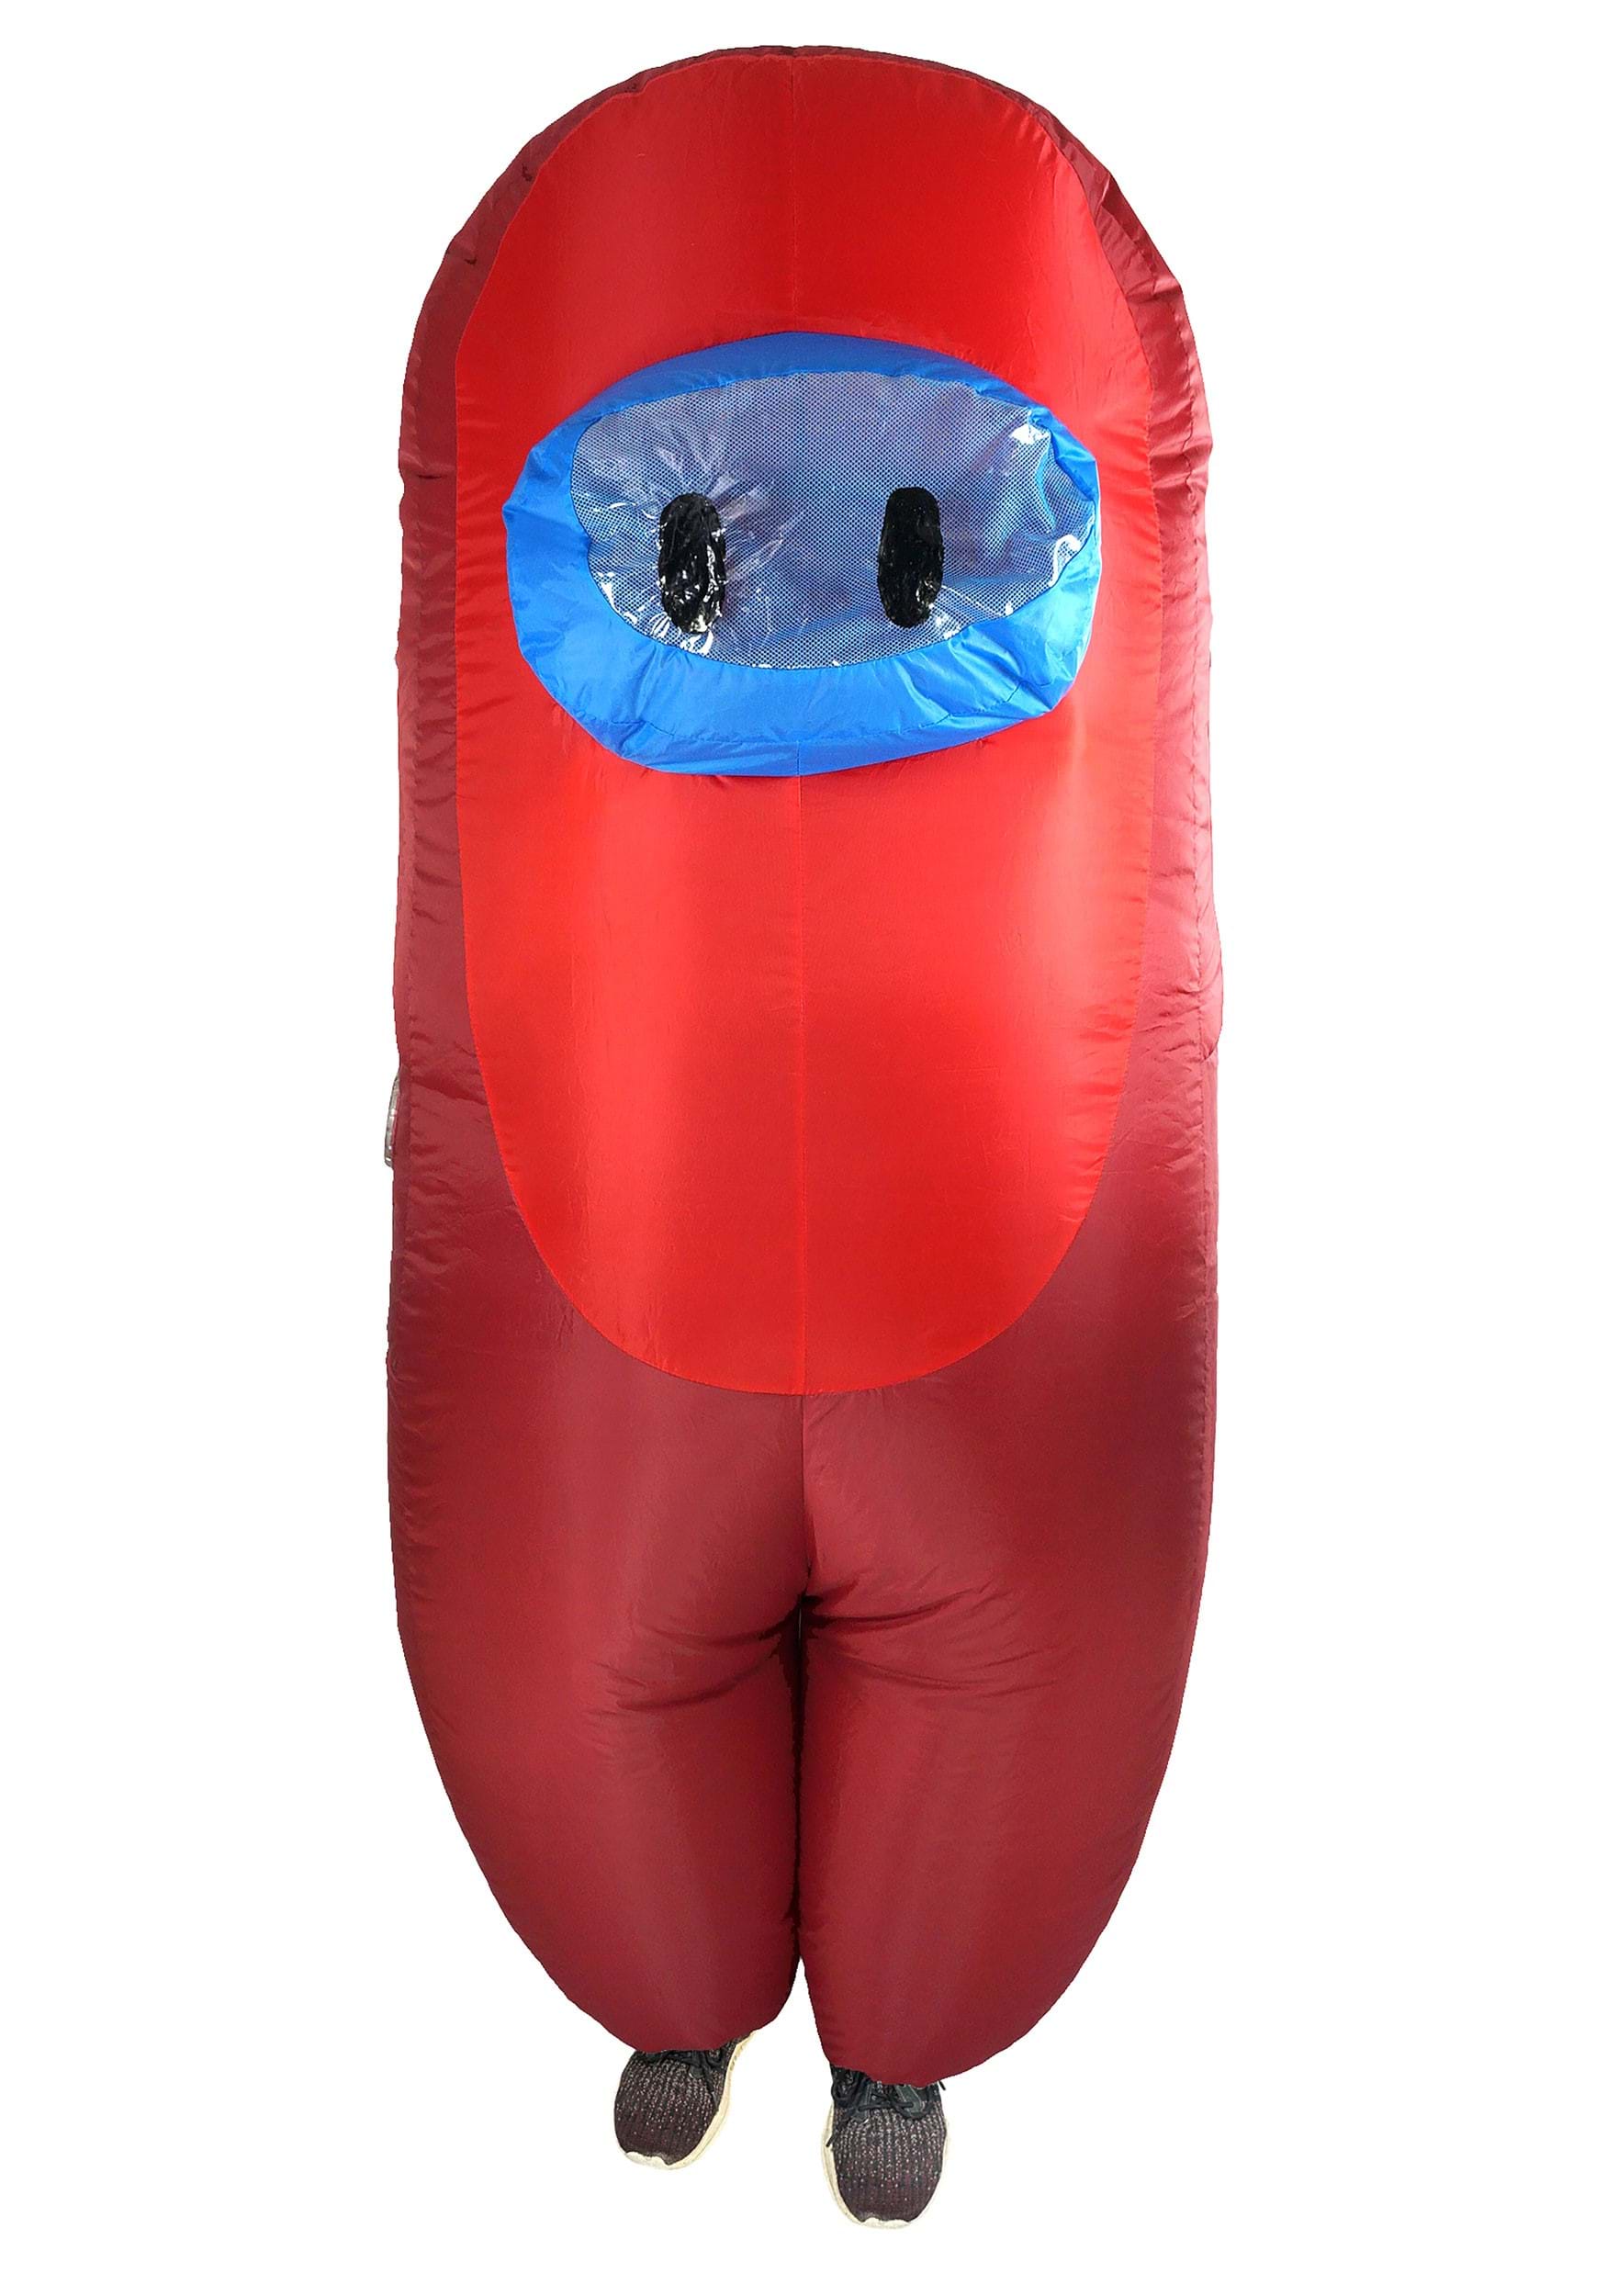 Red Sus Crewmate Killer Costume for Kids